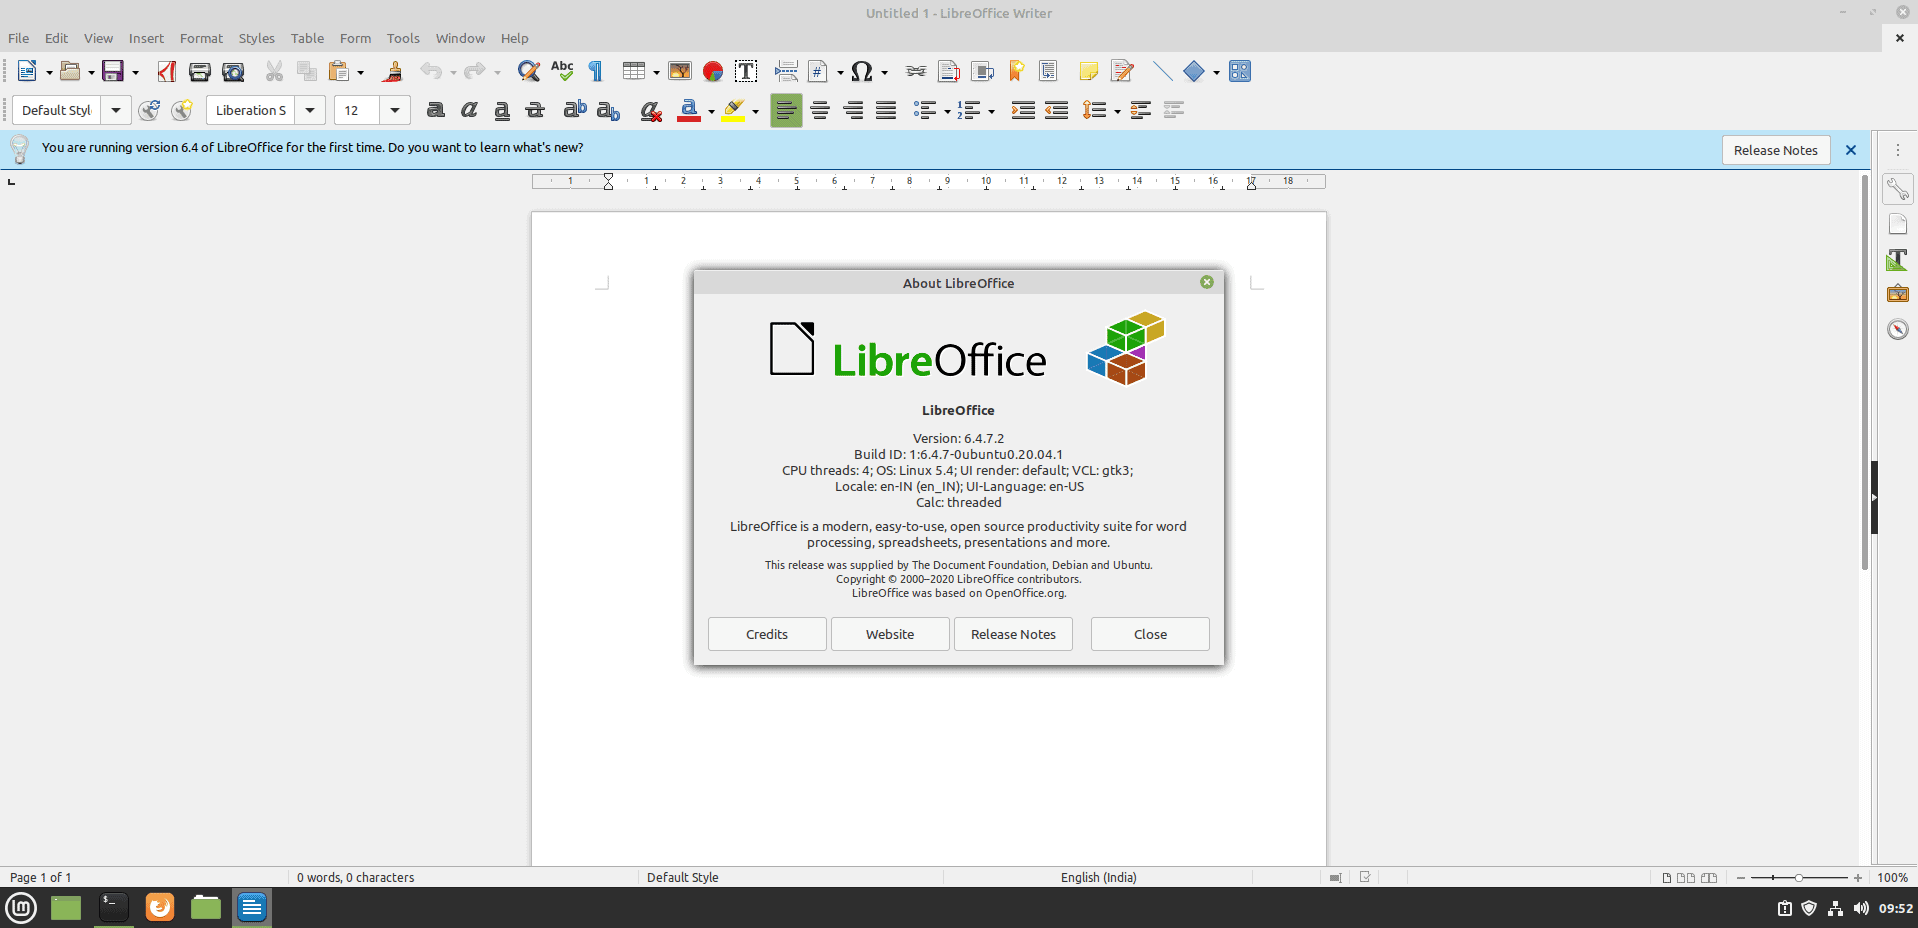 Libreoffice Version Info